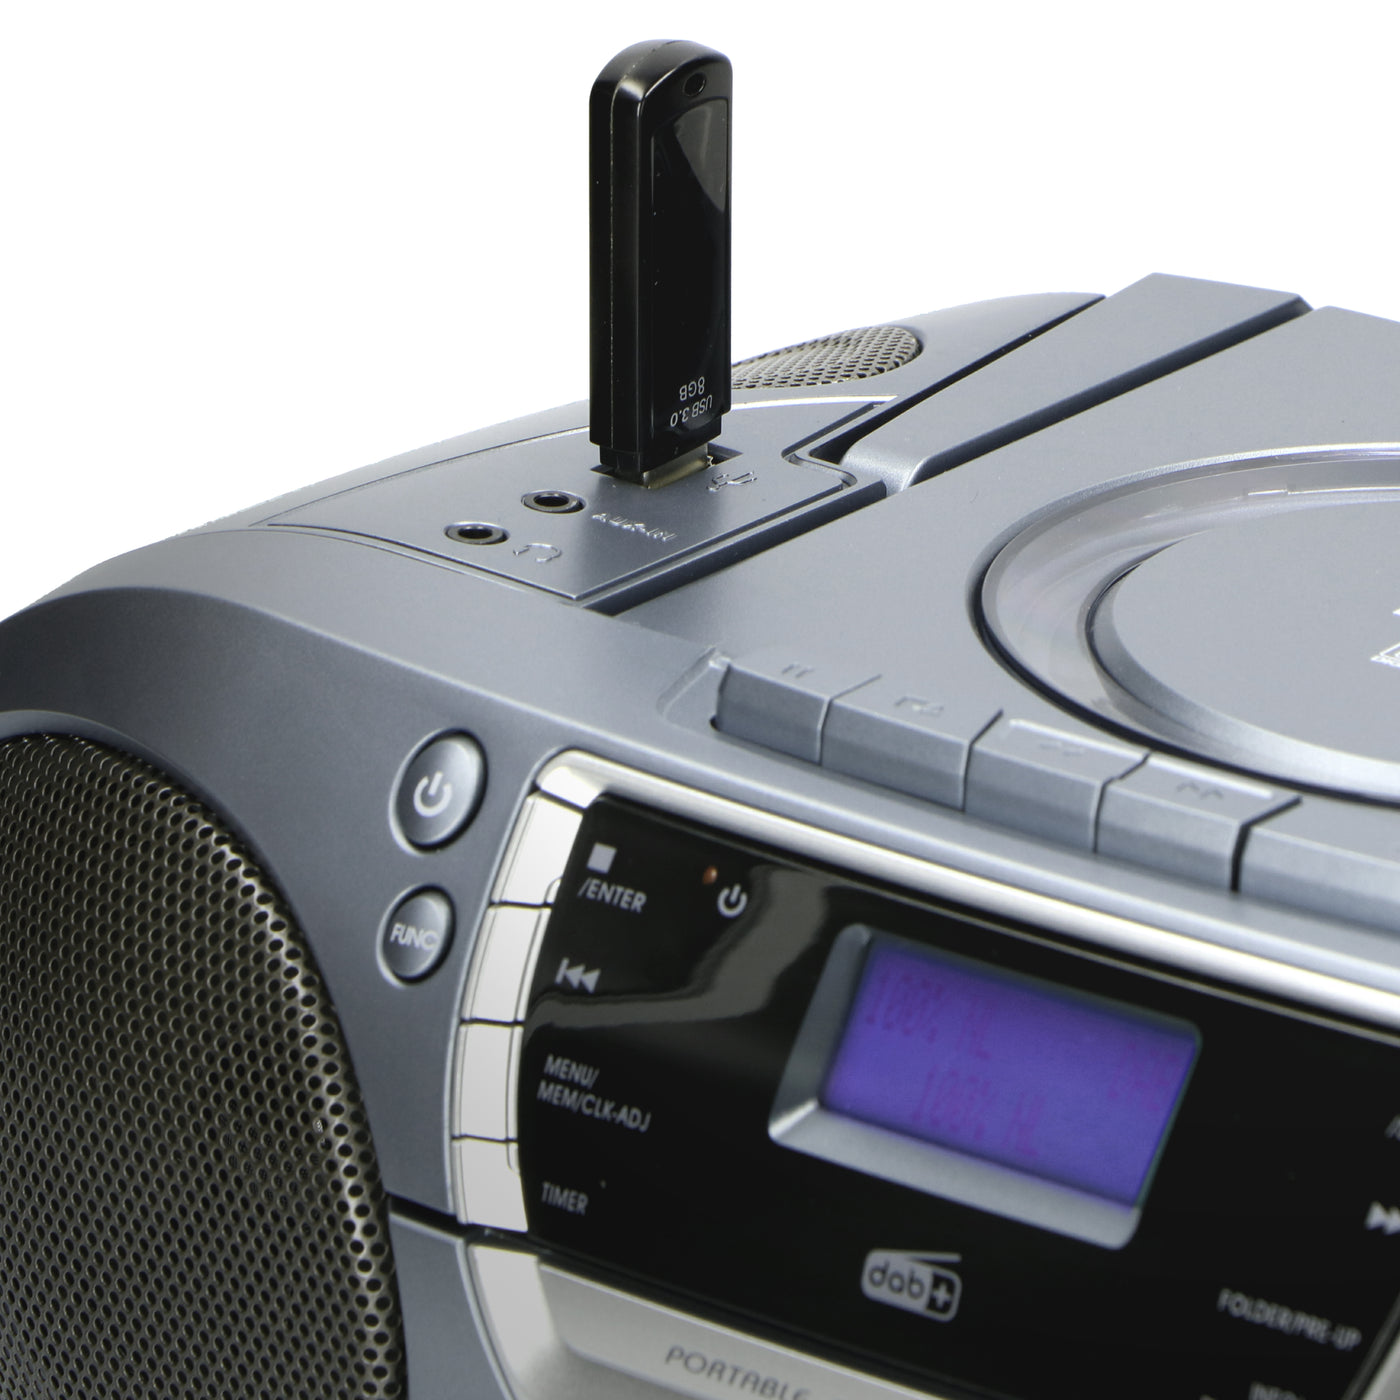 LENCO SCD-680 Portable DAB+ Radio - CD - cassette player - USB